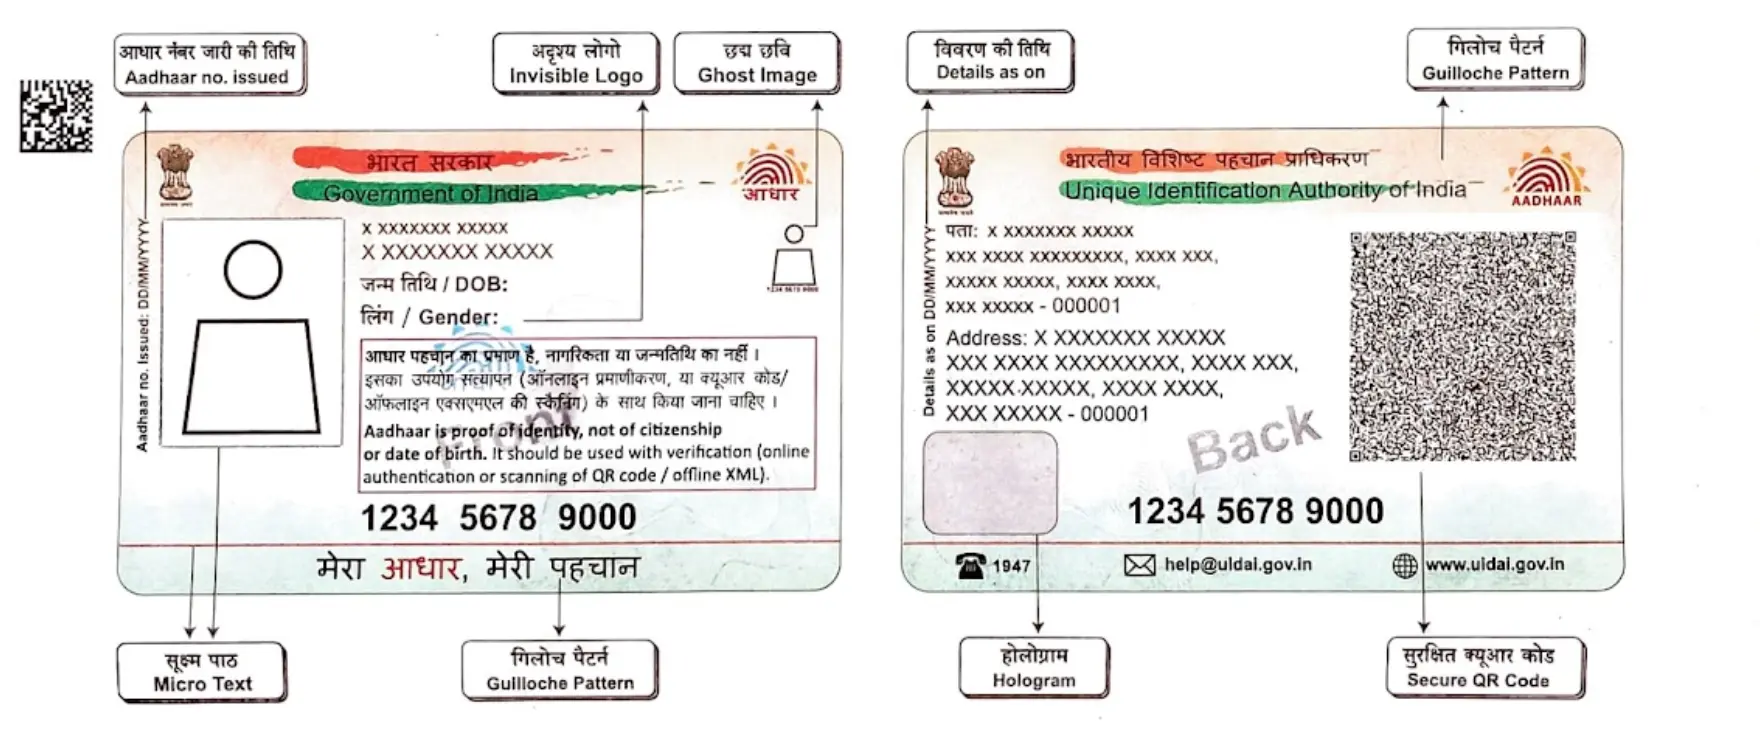 PVC Aadhaar Card Features